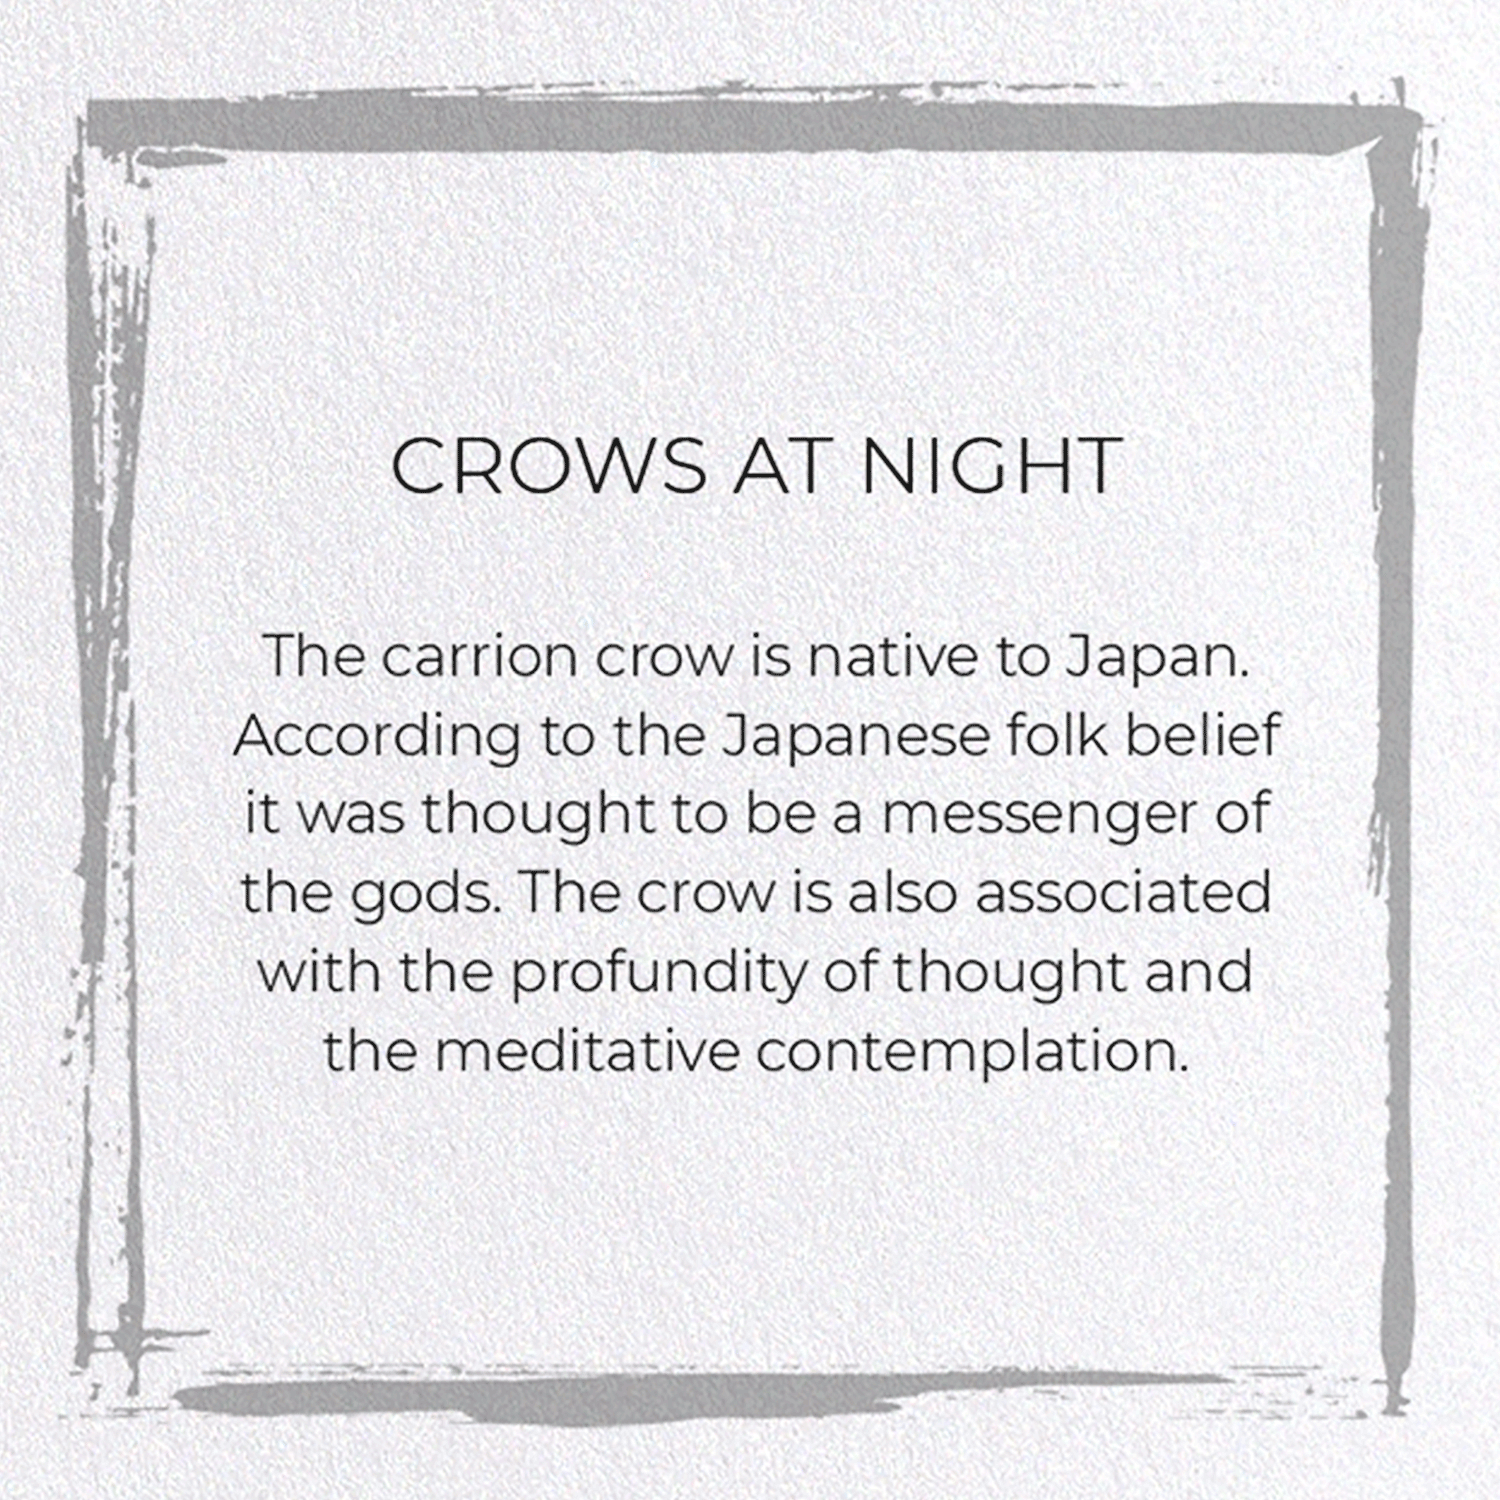 CROWS AT NIGHT